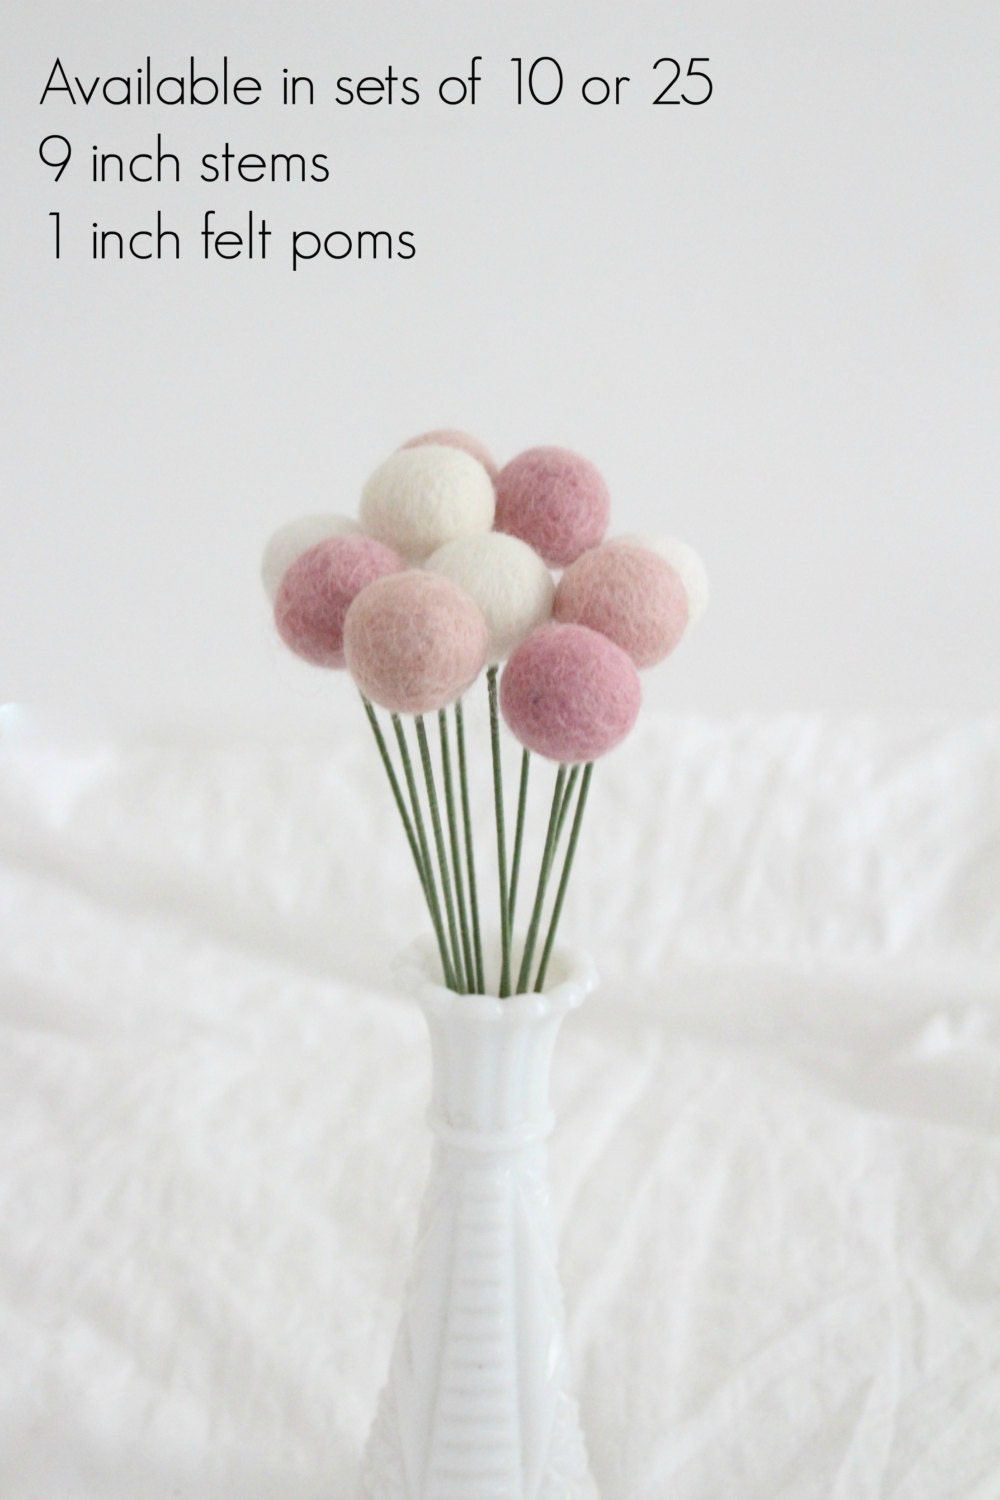 Wool Felt Balls - Size, Approx. 2CM - (18 - 20mm) - 25 Felt Balls Pack -  Color Dusty Pink-4005 - 2CM Felt Balls - Felt Pom Poms - Pink Beads